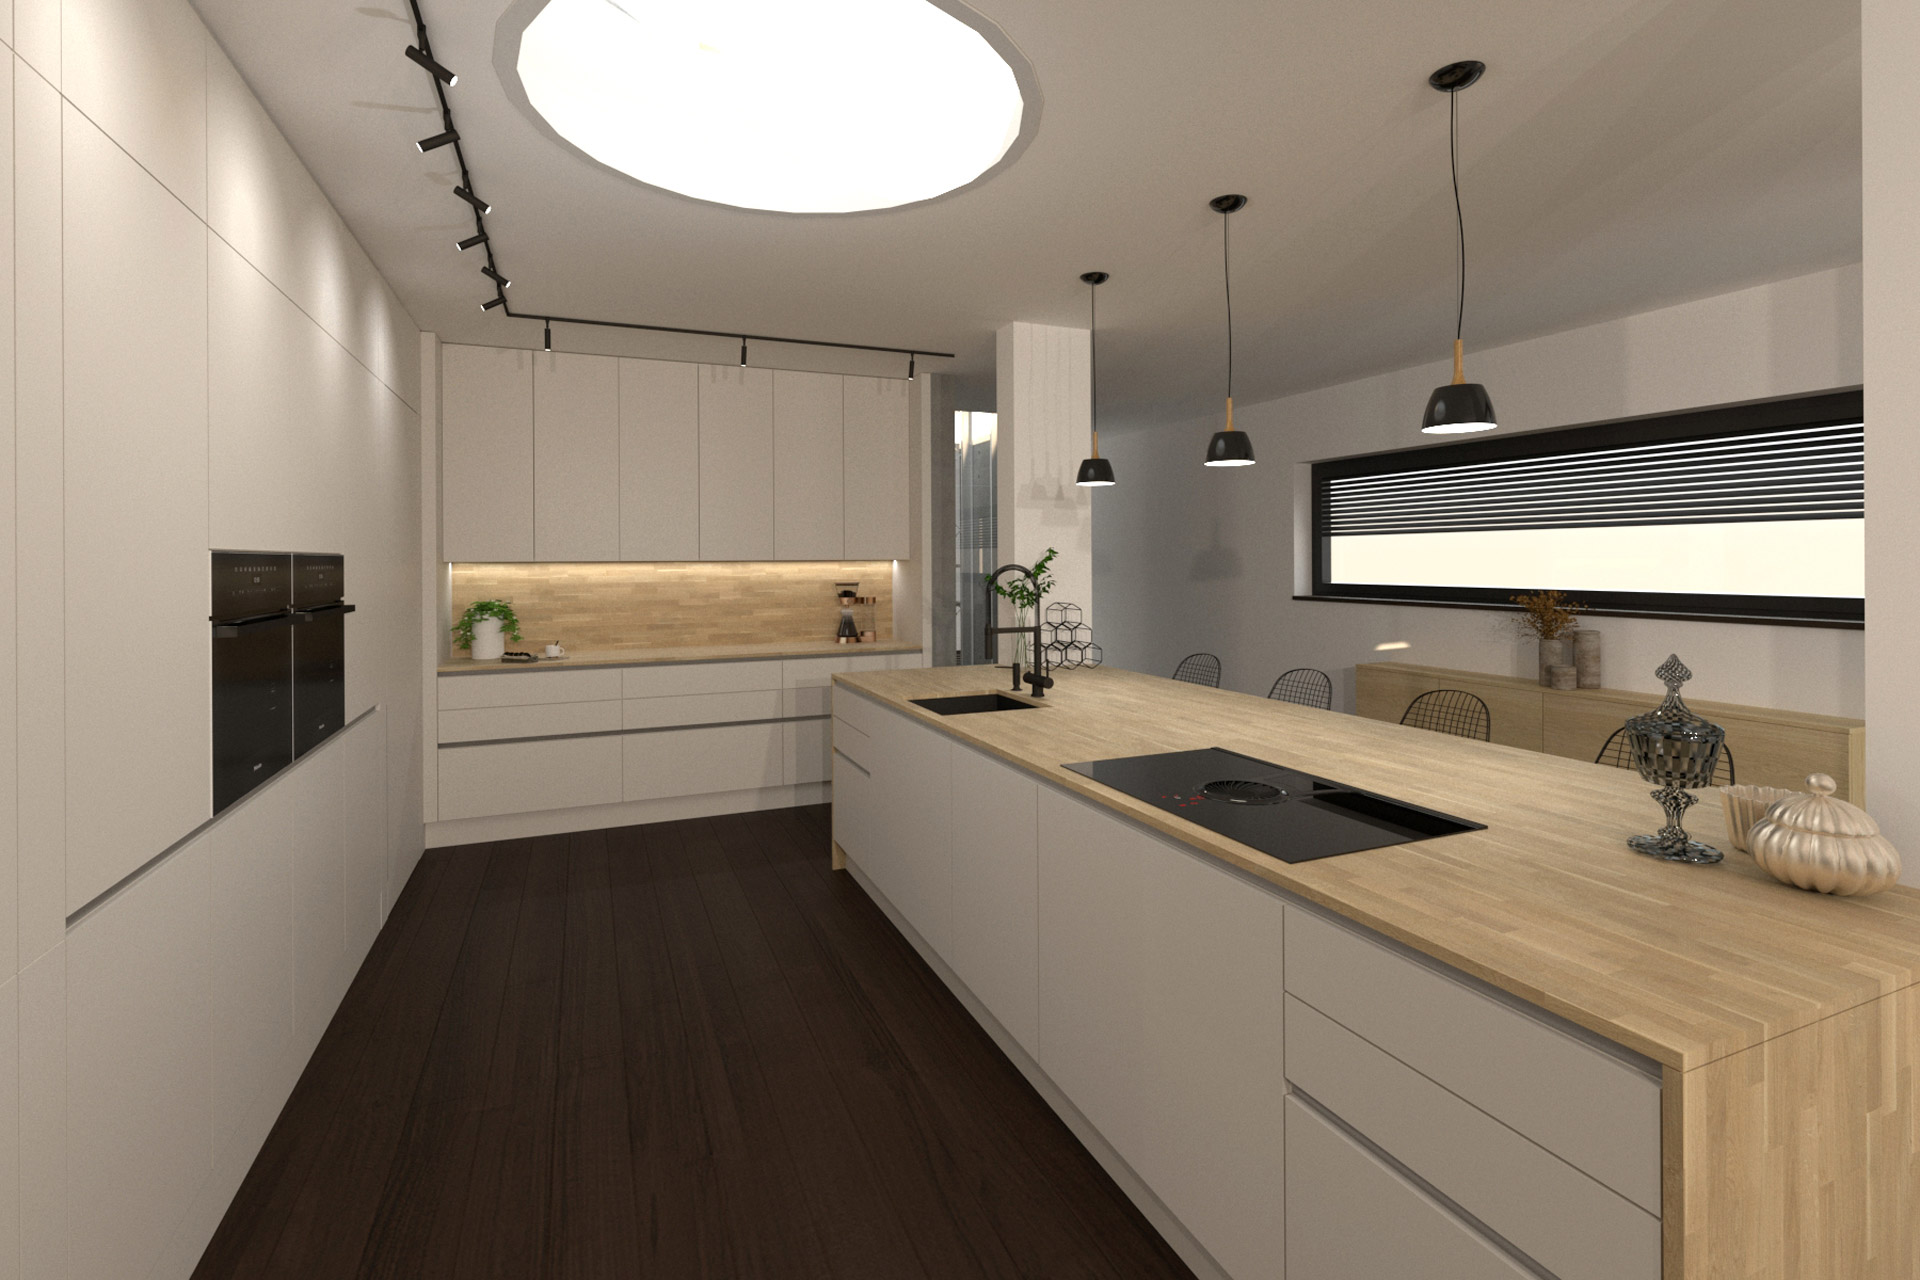 Hanak Modern interior design of the house Kitchen